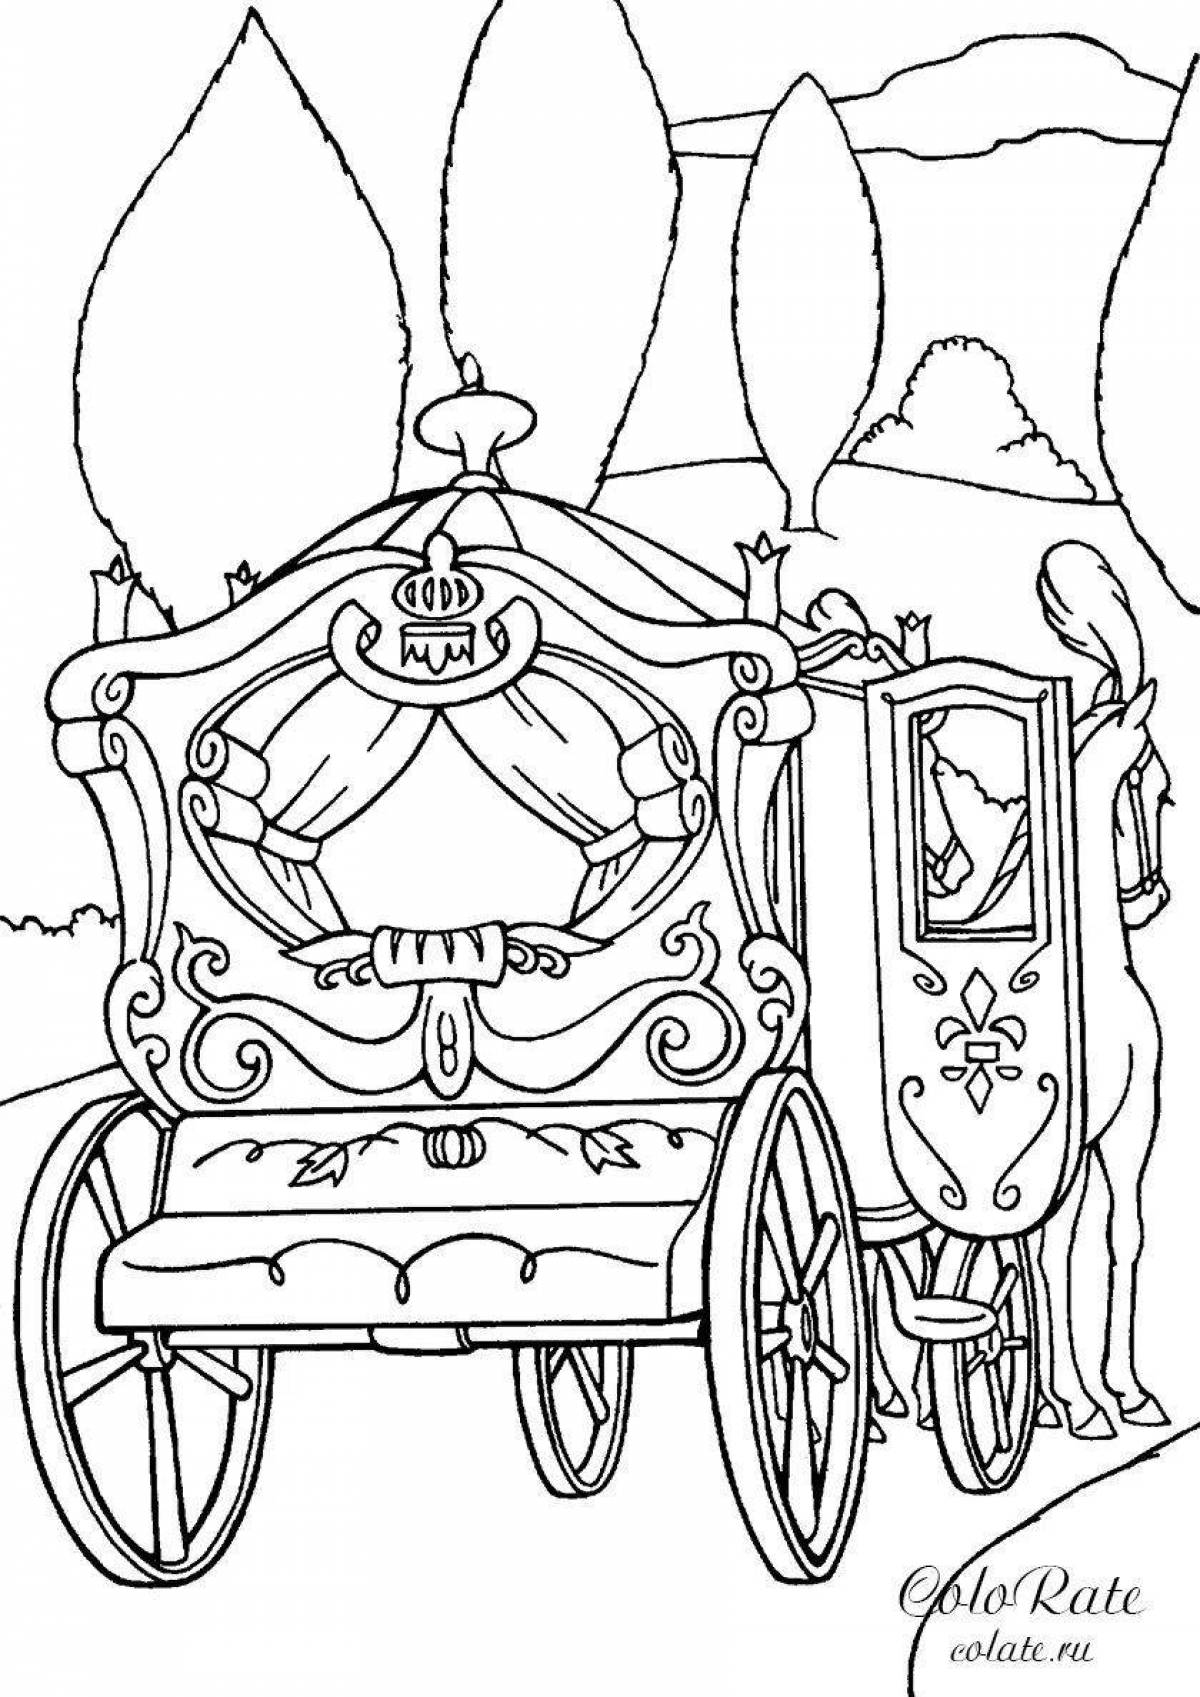 Cinderella's exquisite carriage coloring book